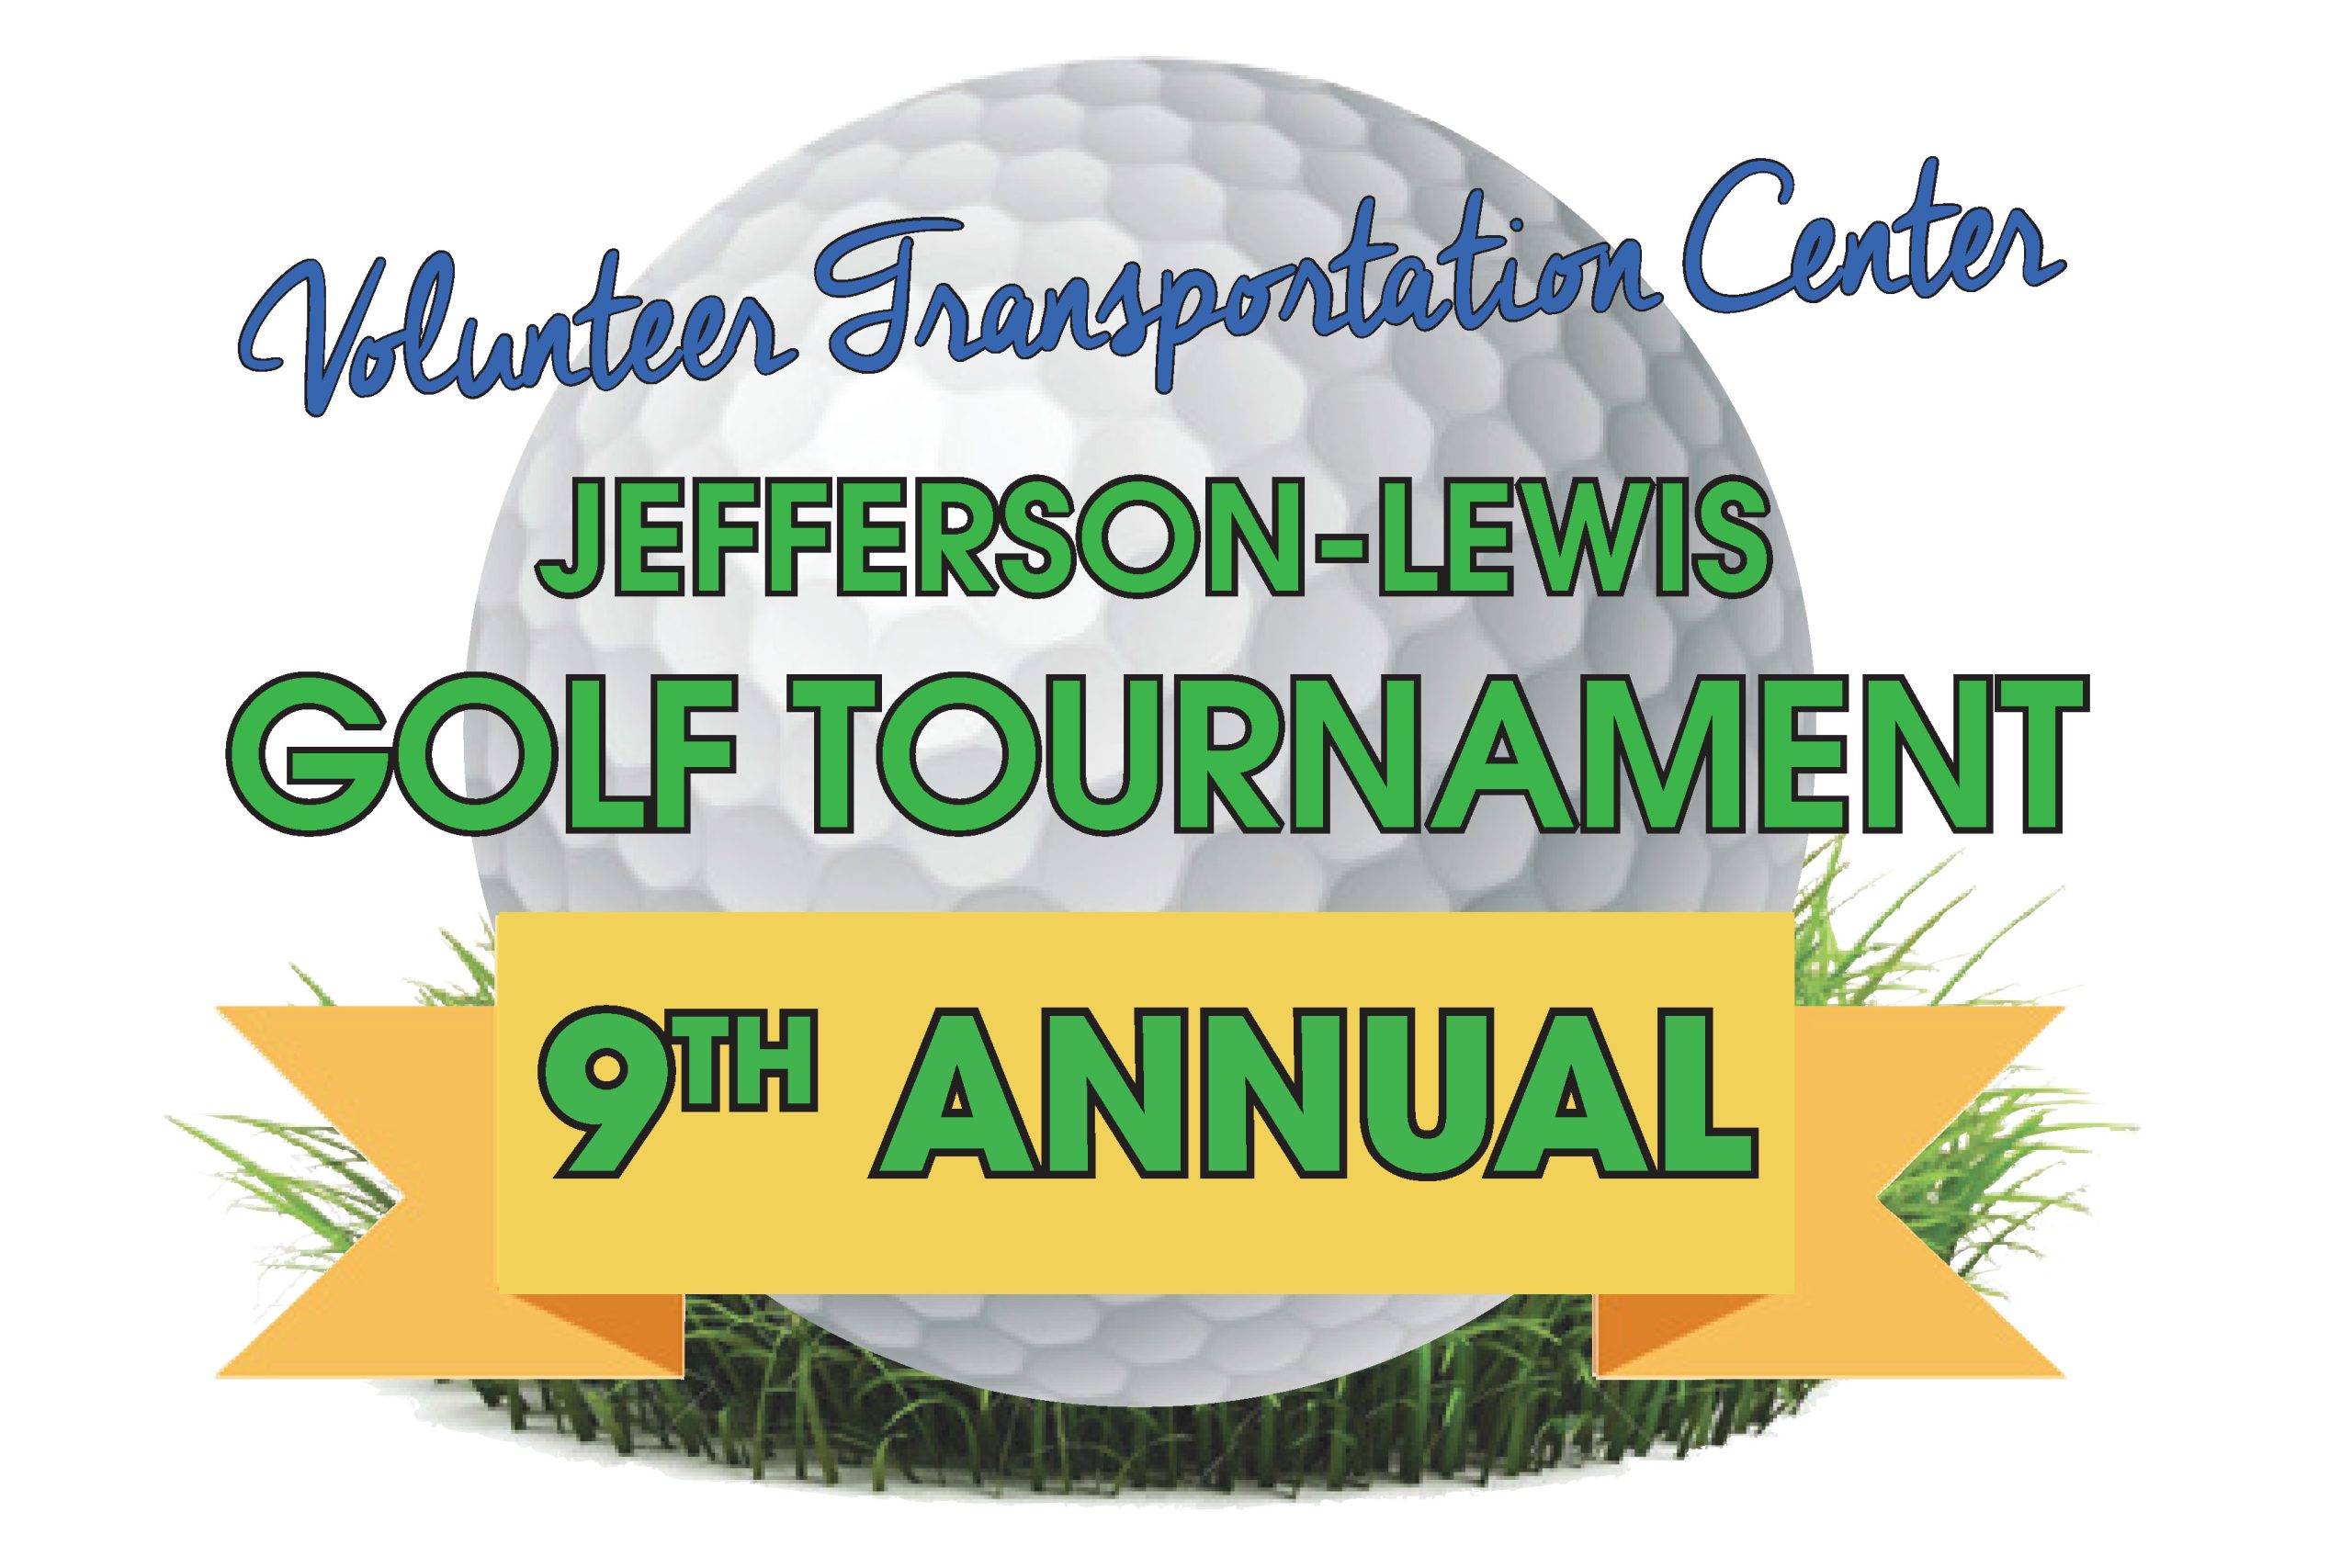 9th Annual Volunteer Transportation Center Jefferson-Lewis Golf Tournament